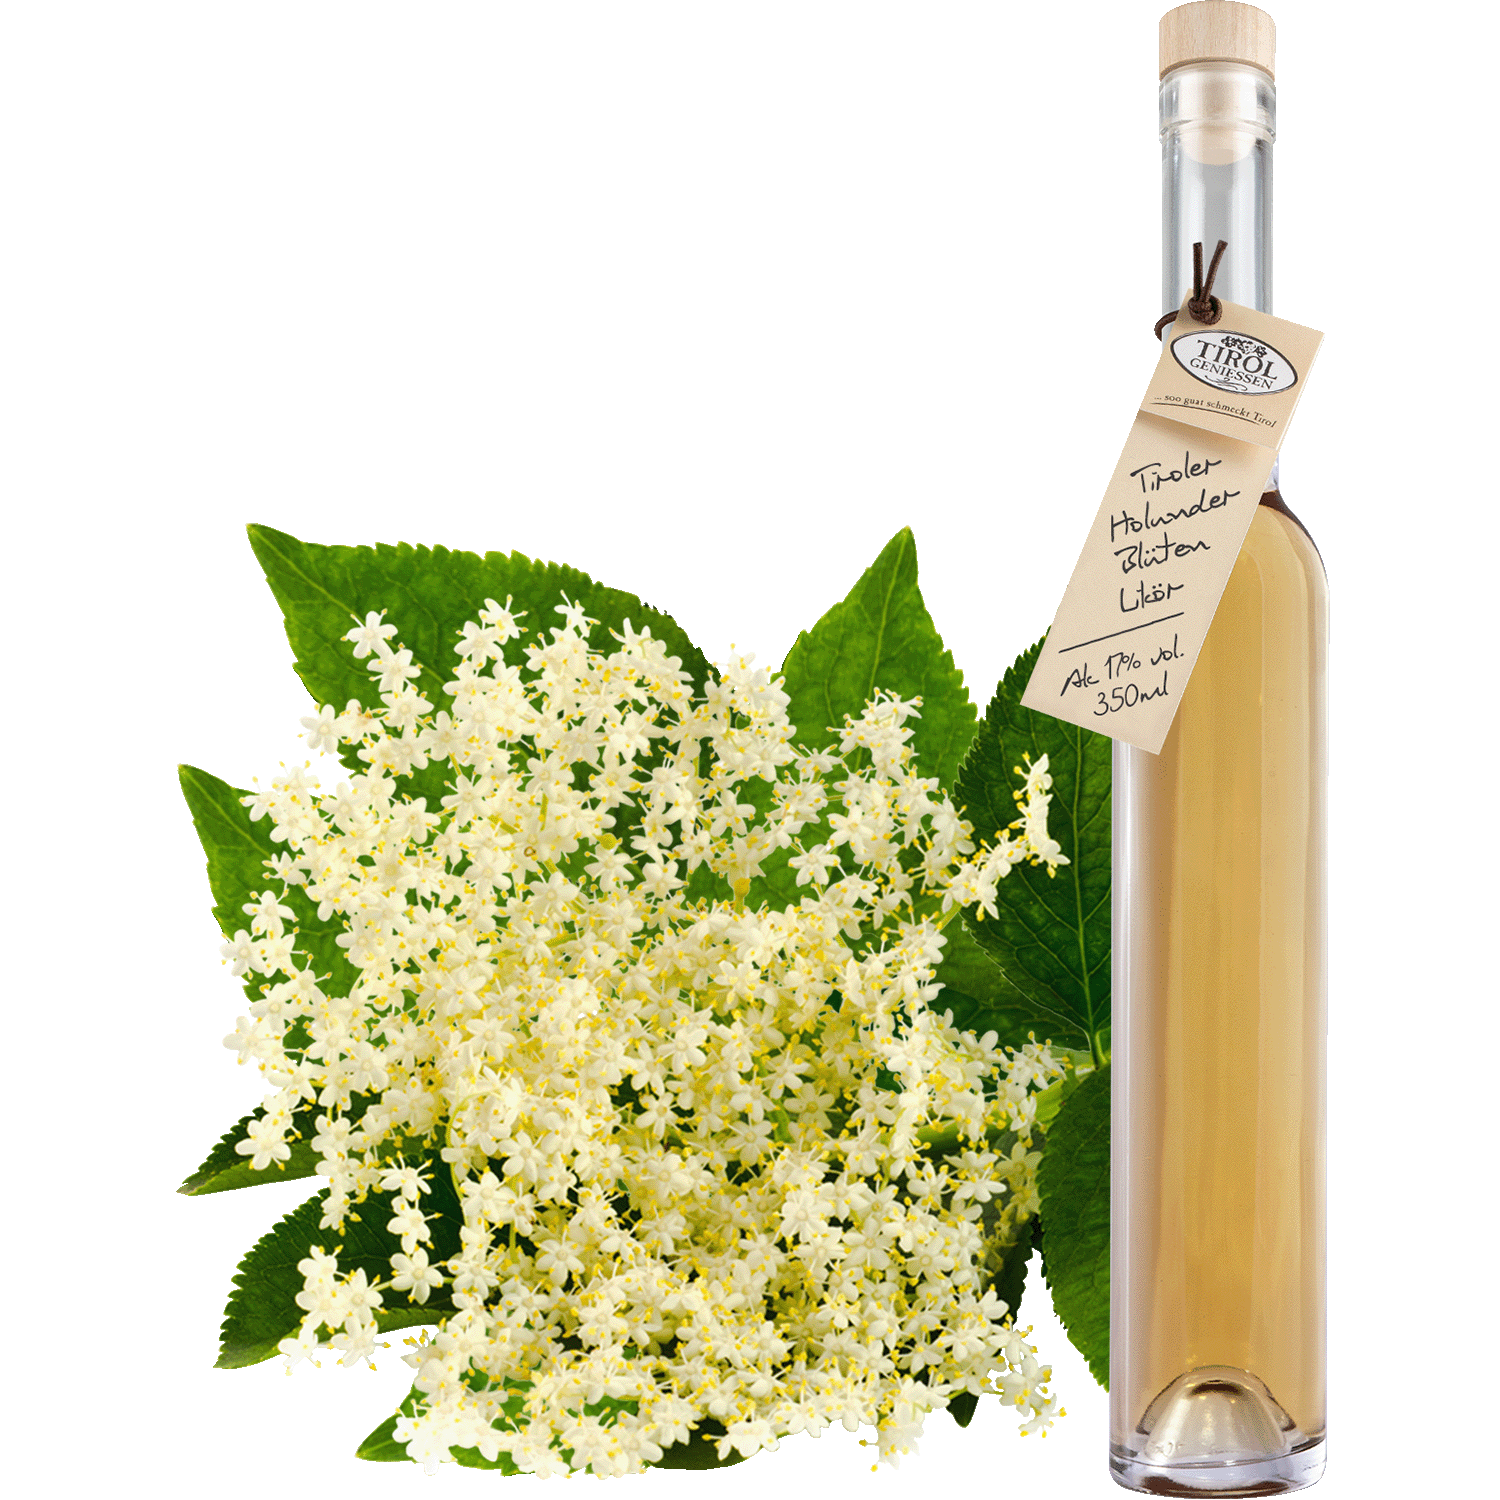 Elderflower Liqueur in gift bottle from Austria from Tirol Geniessen